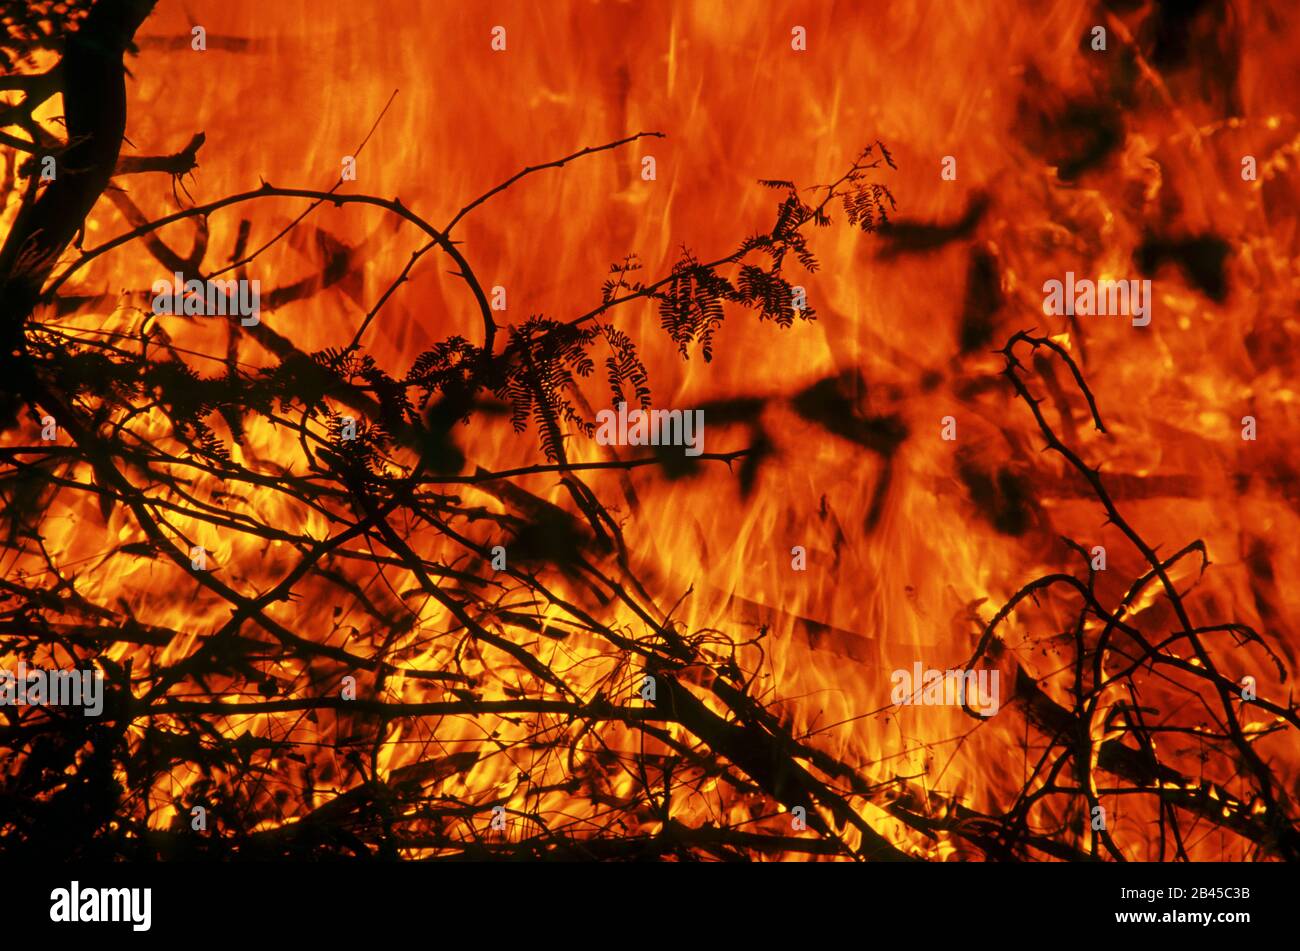 Bush on fire Stock Photo